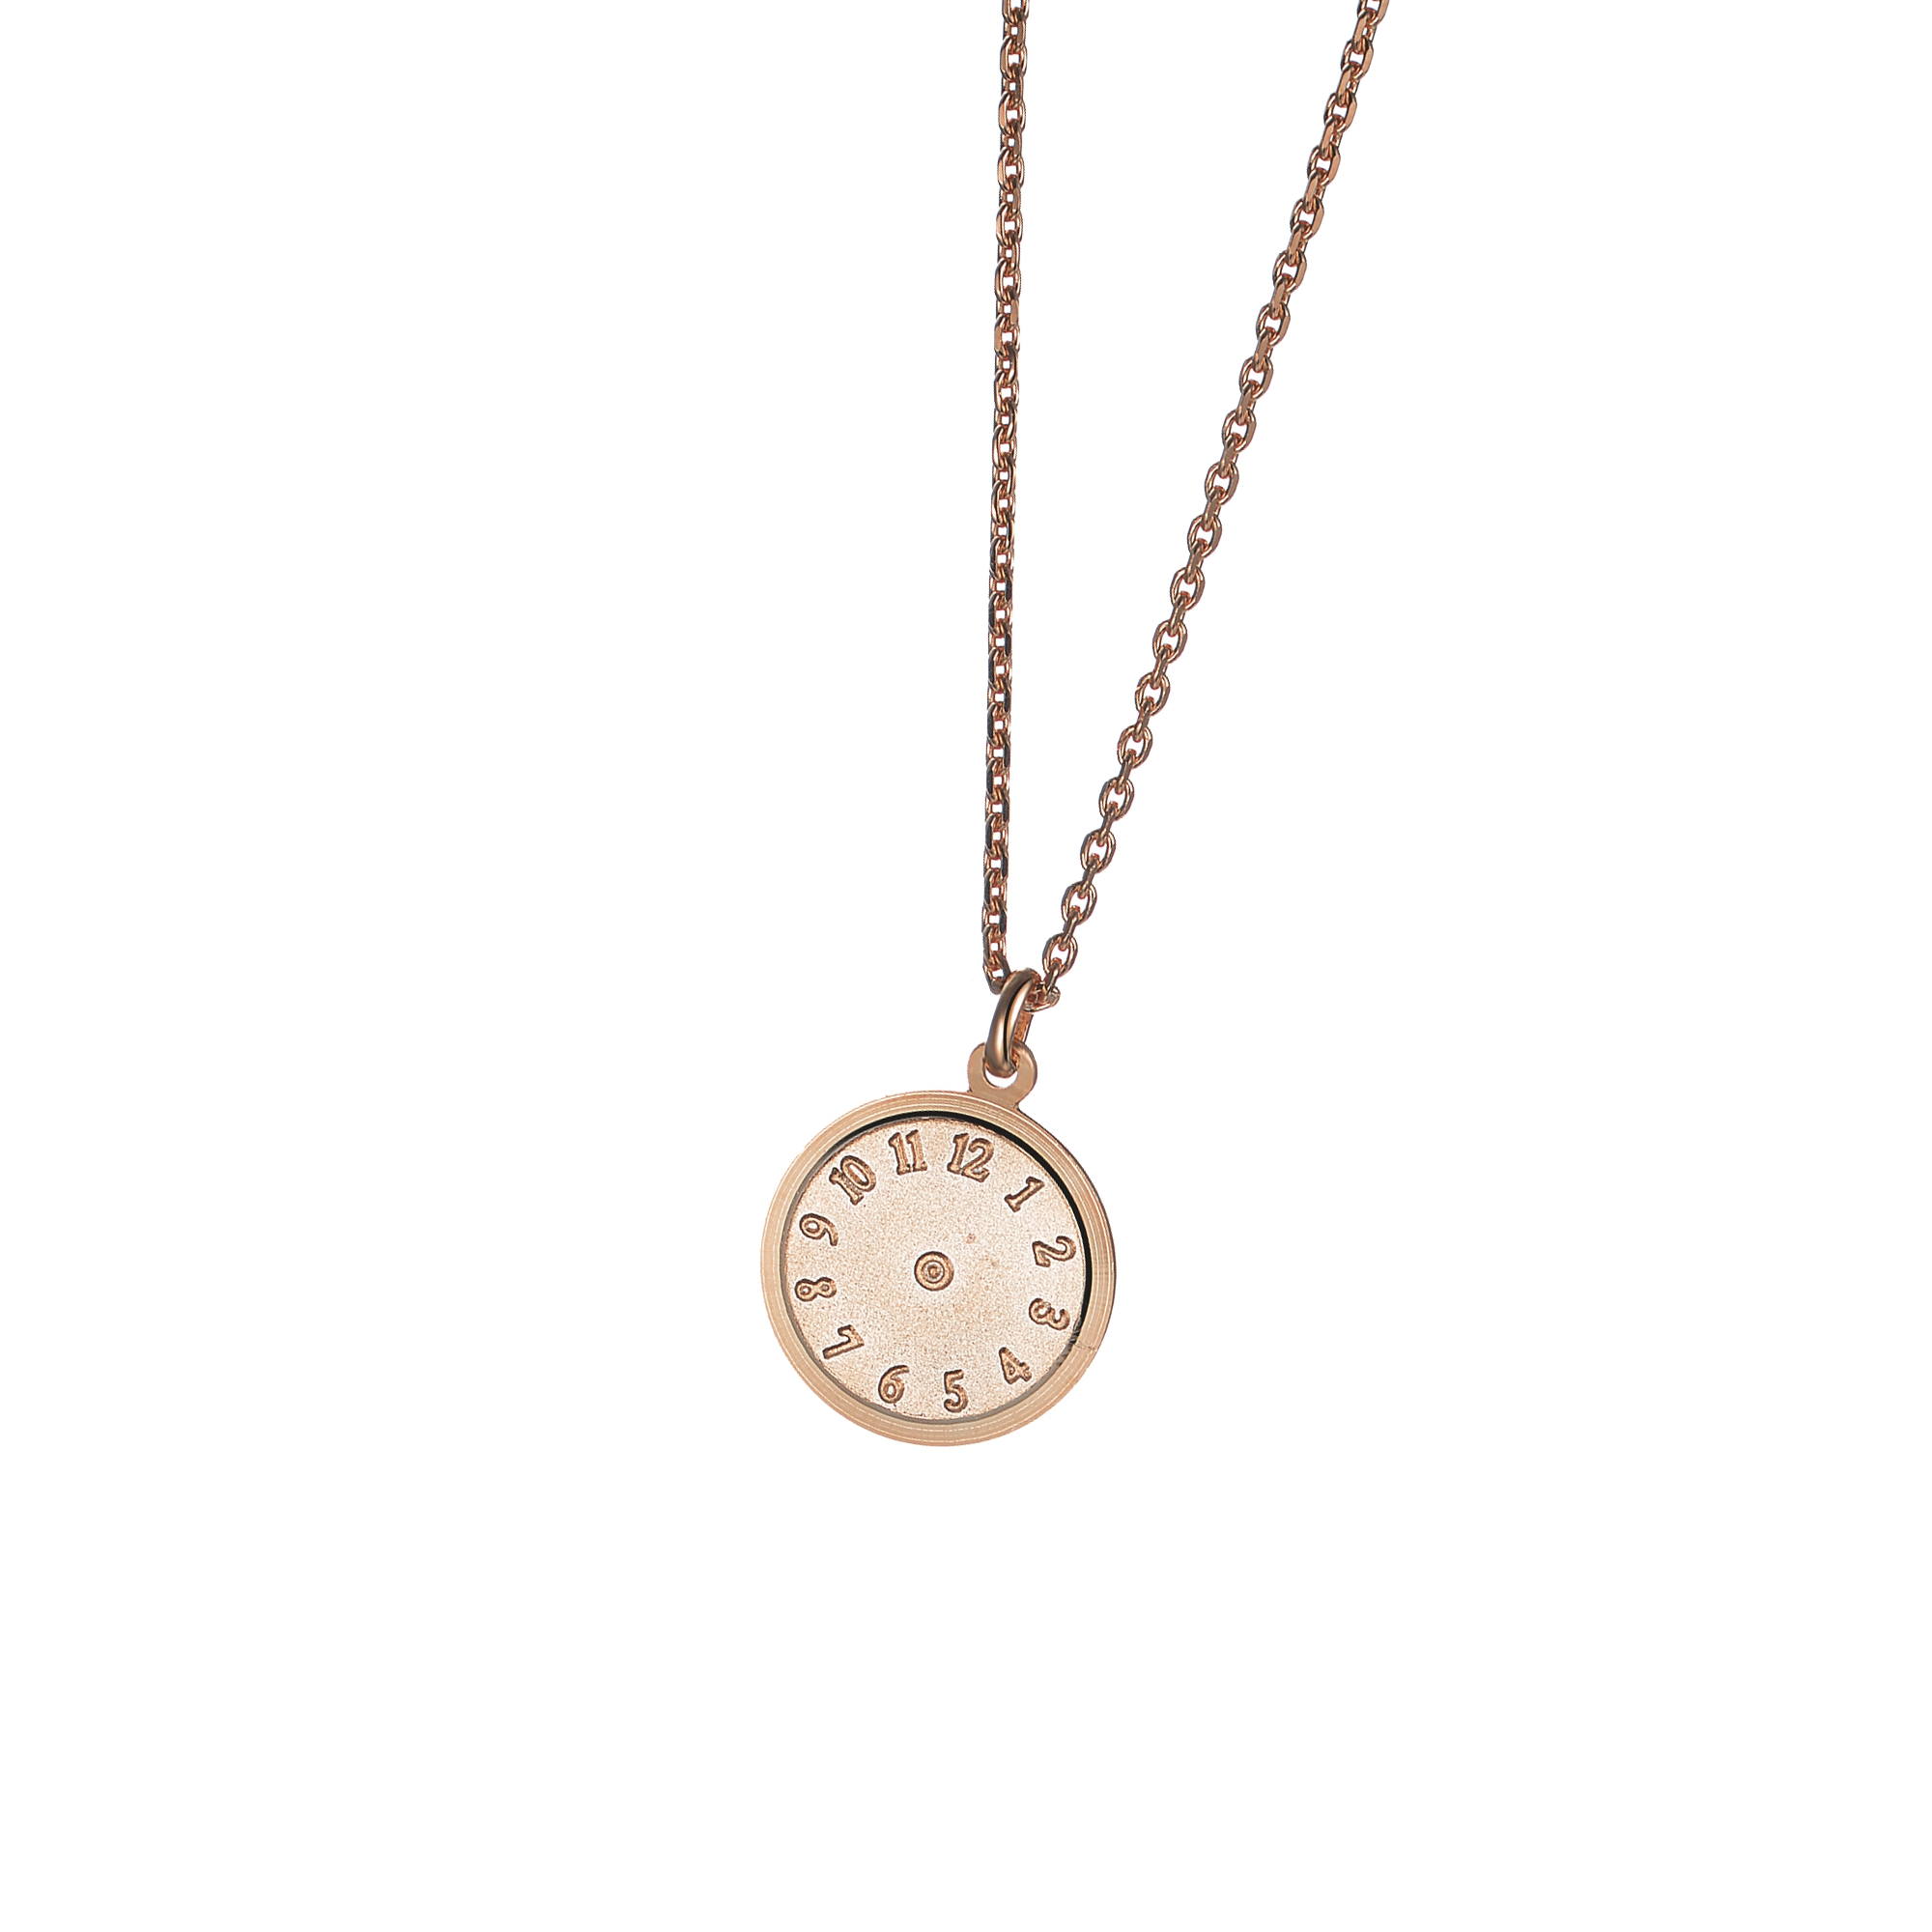 DOOSTI -Damen-Halskette-mit-Anhaenger-Uhr-925-Silber-Rosegold-vergoldetSI-N-66-RG | Lange Ketten